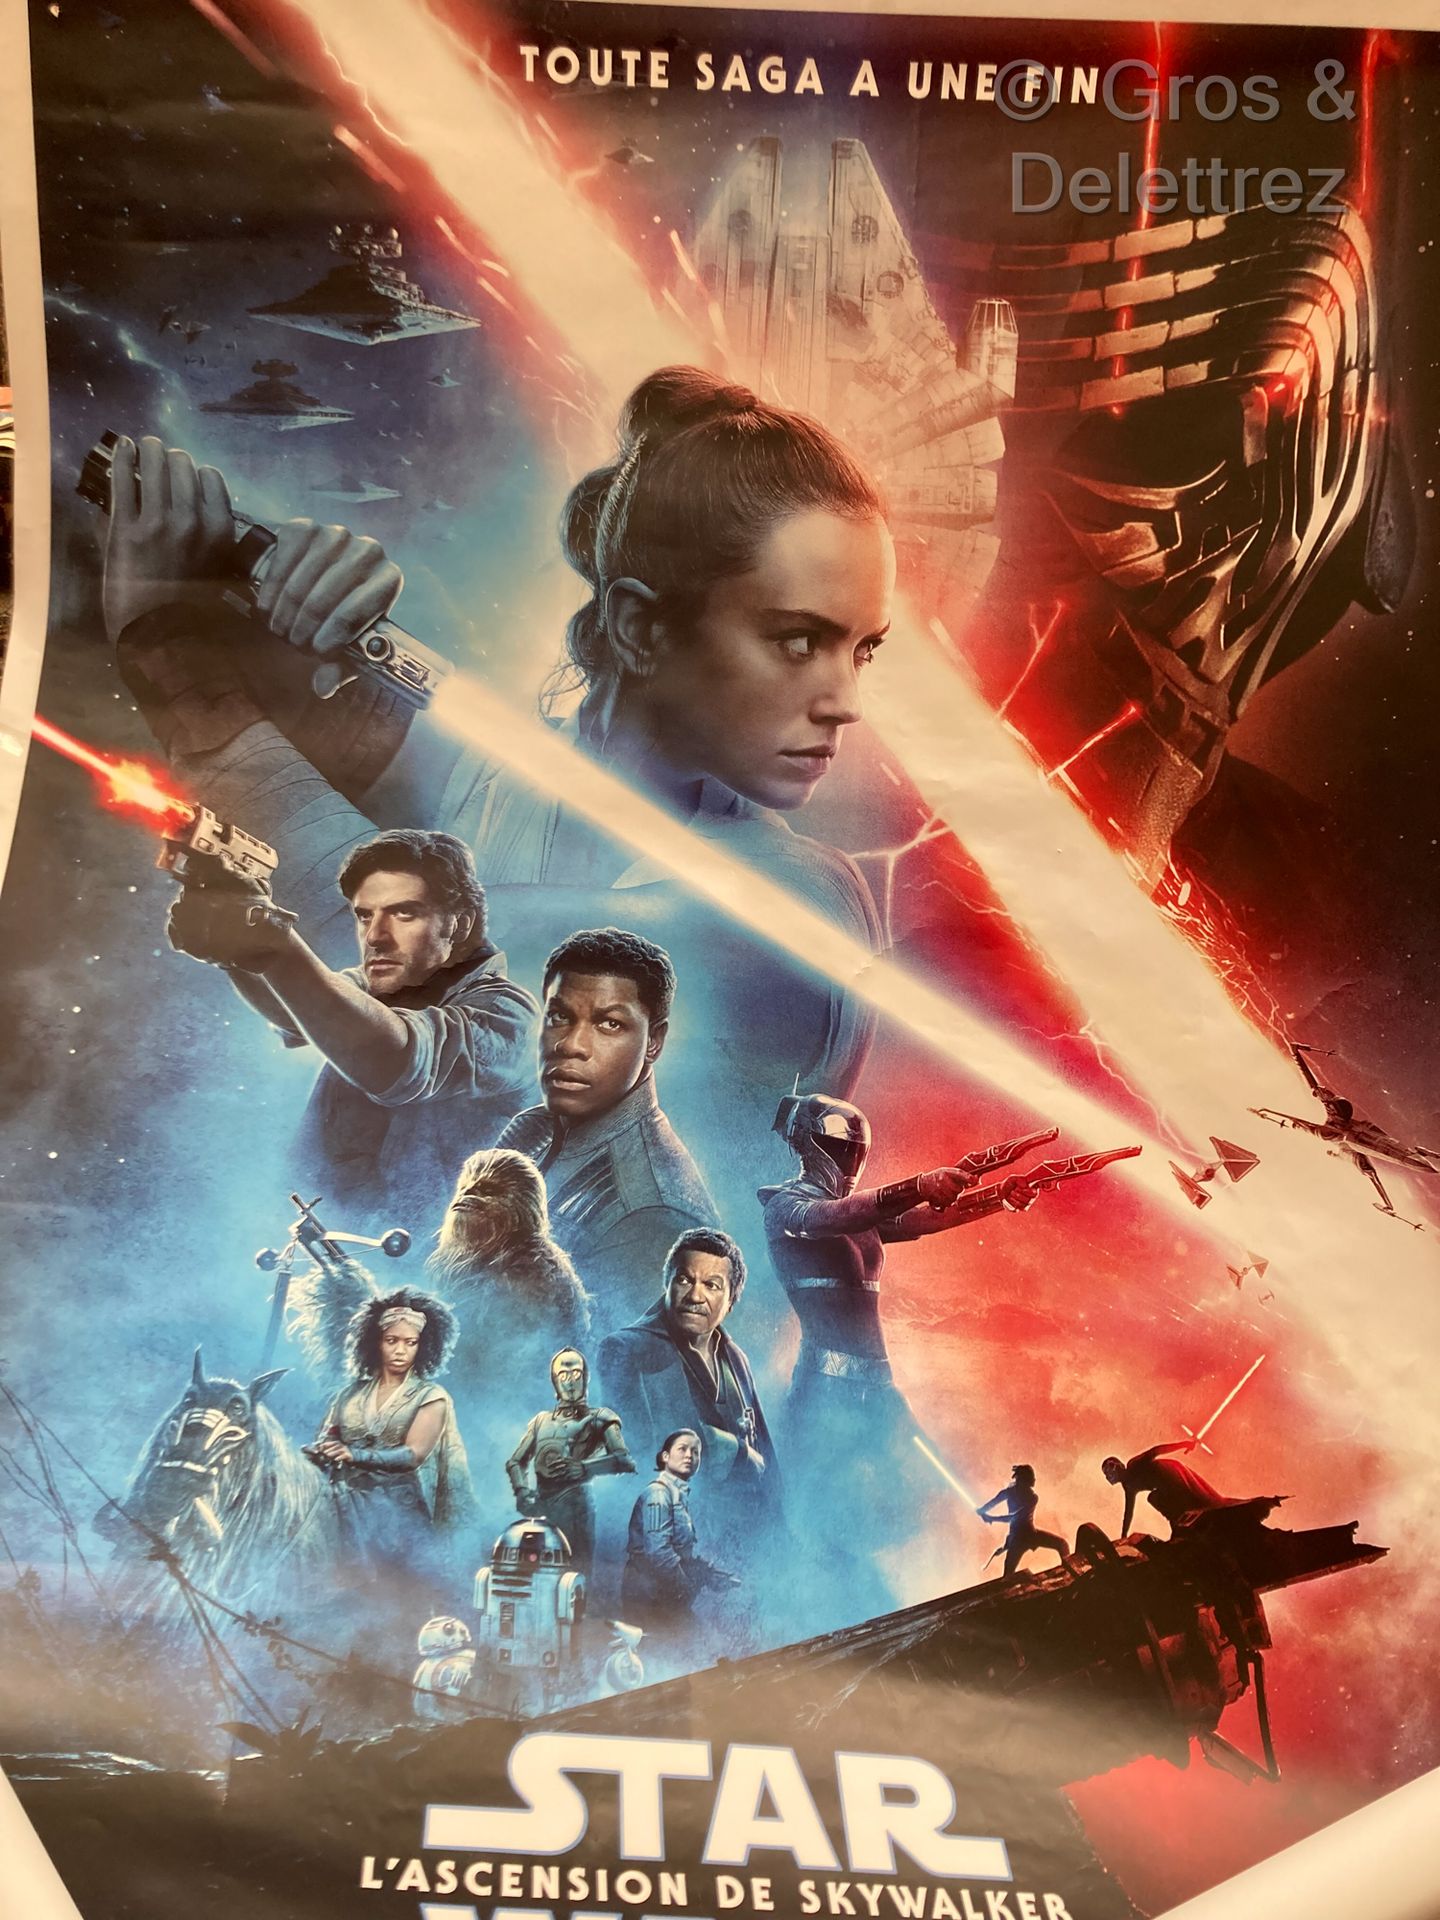 Disney & JJ Abrams Guerre stellari IX

Poster del film 159 x 119 cm. Fori